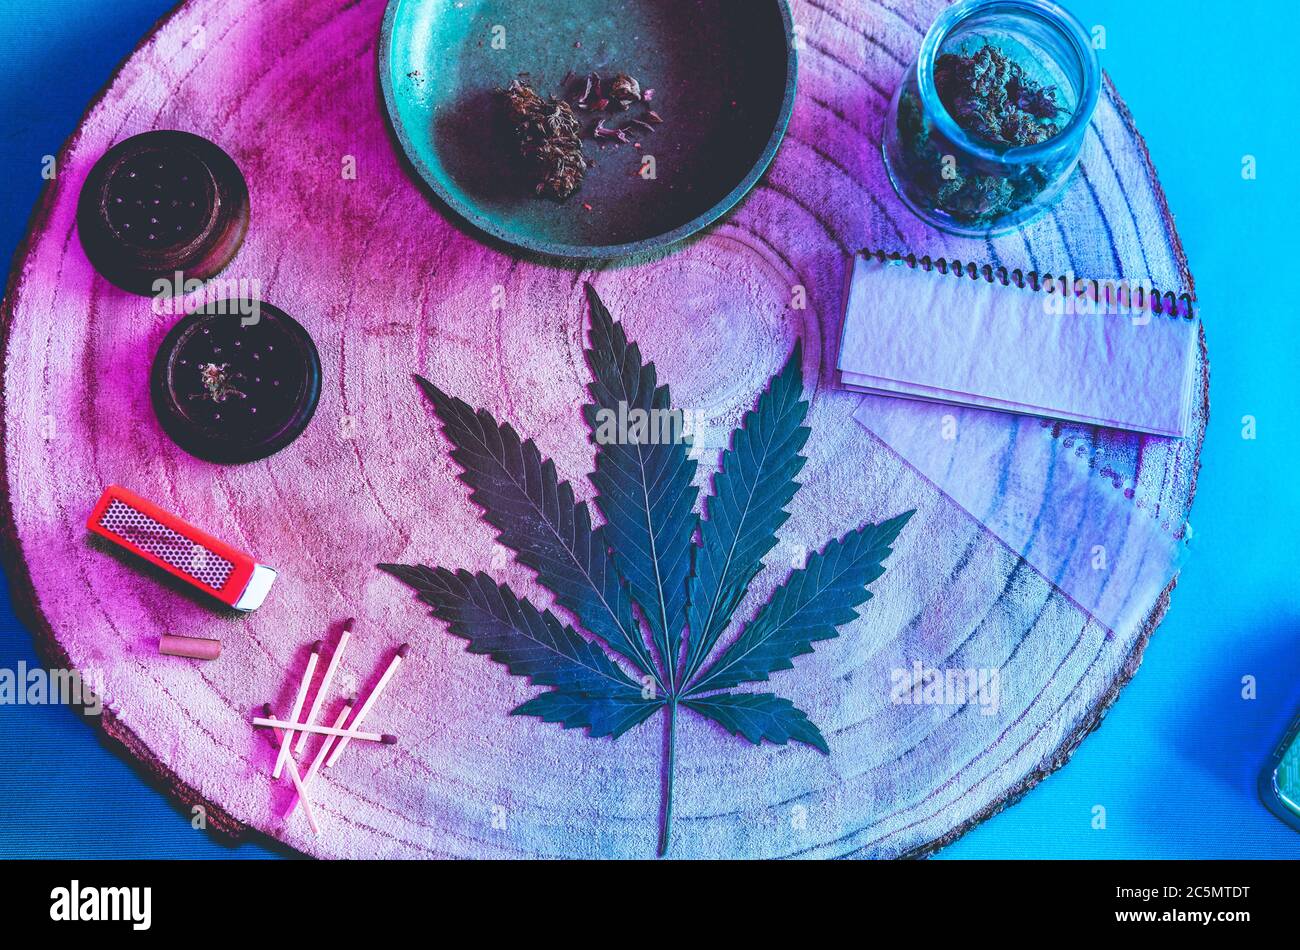 Molinillo con flores de cannabis trituradas, papeles ecológicos, cerillas, hoja seca de maleza sobre mesa de madera - enfoque en la hoja - luces de neón azules y púrpura edición Foto de stock